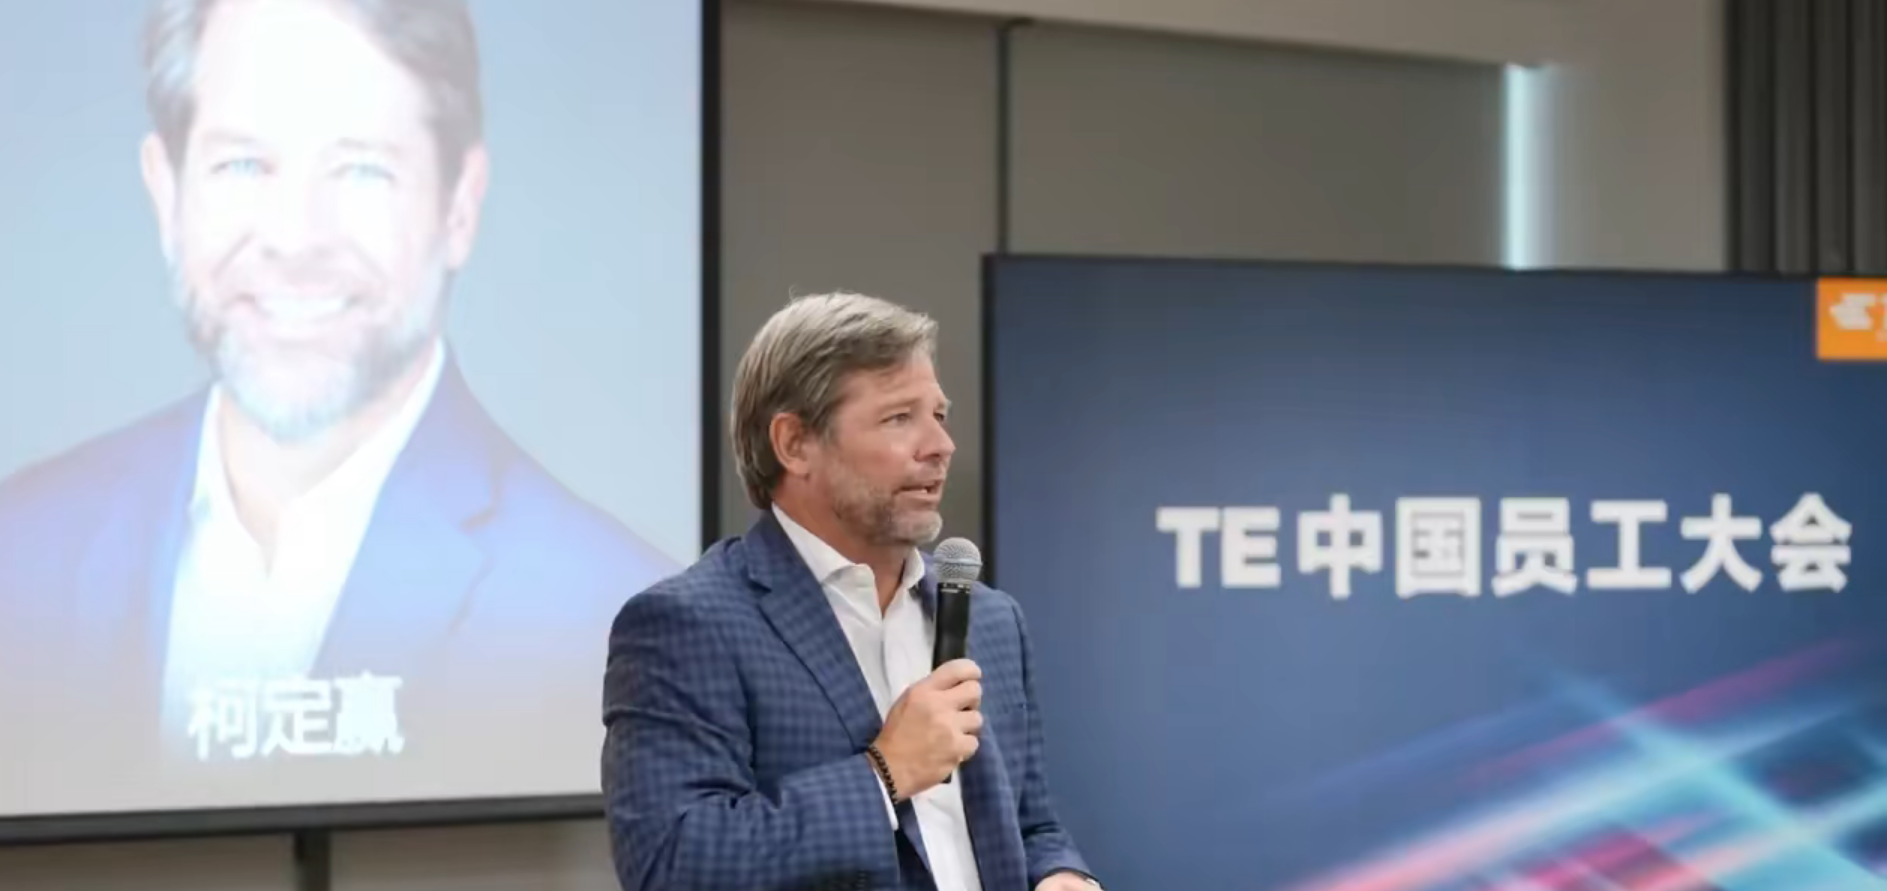 TE Connectivity 首席执行官 中国行，全程精彩回顾！